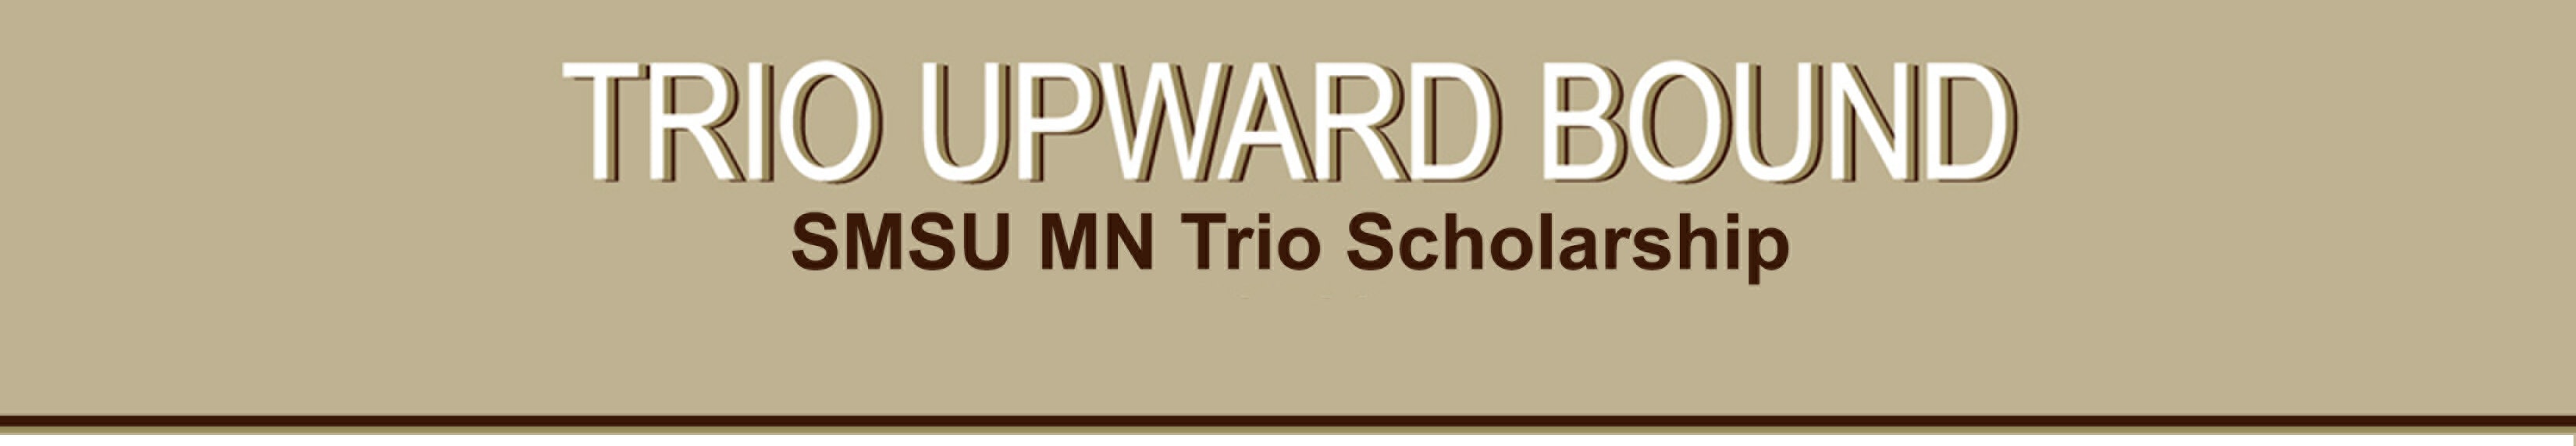 mn trio scholarship banner